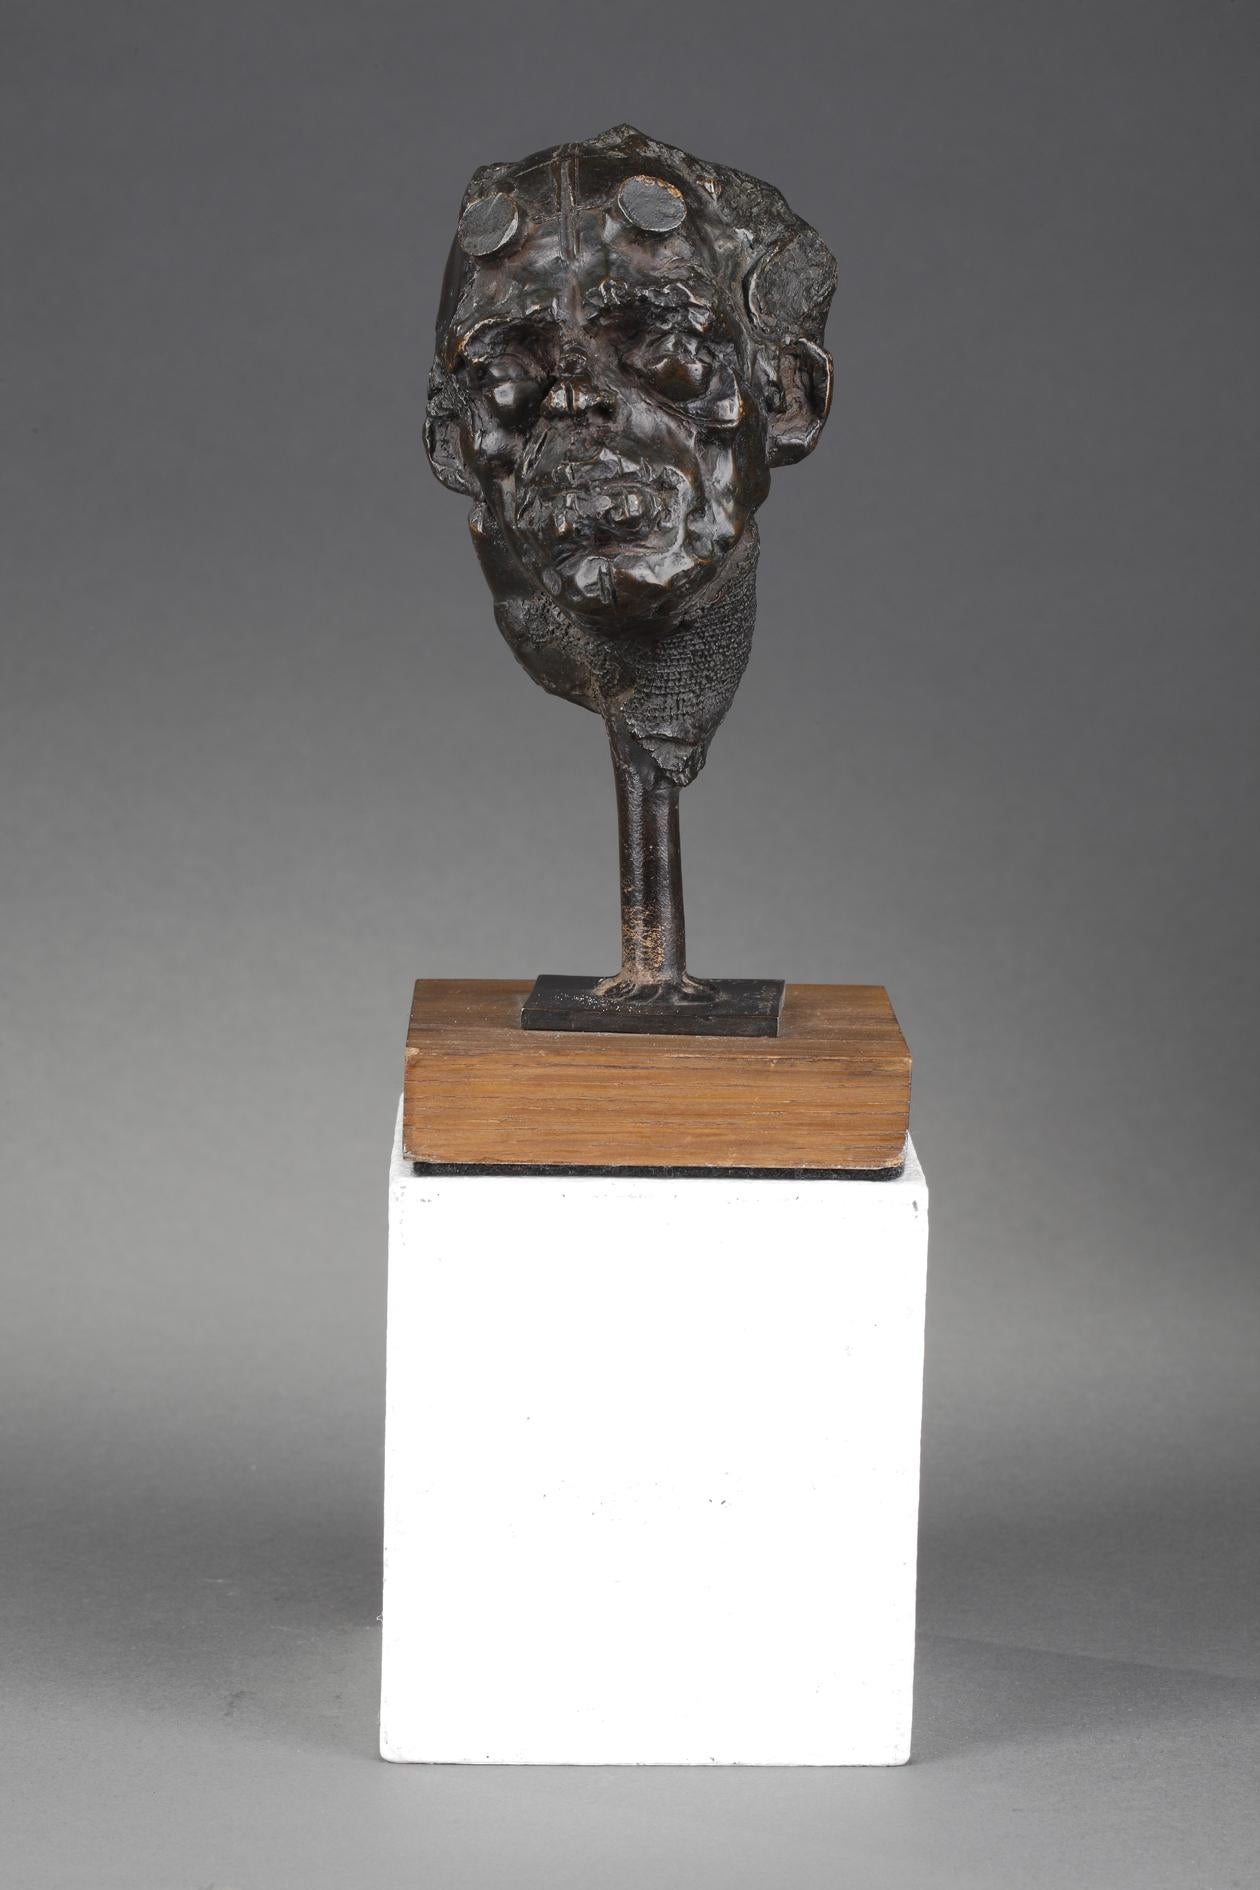 Man's head wearing glasses - Sculpture by Laurent Belloni